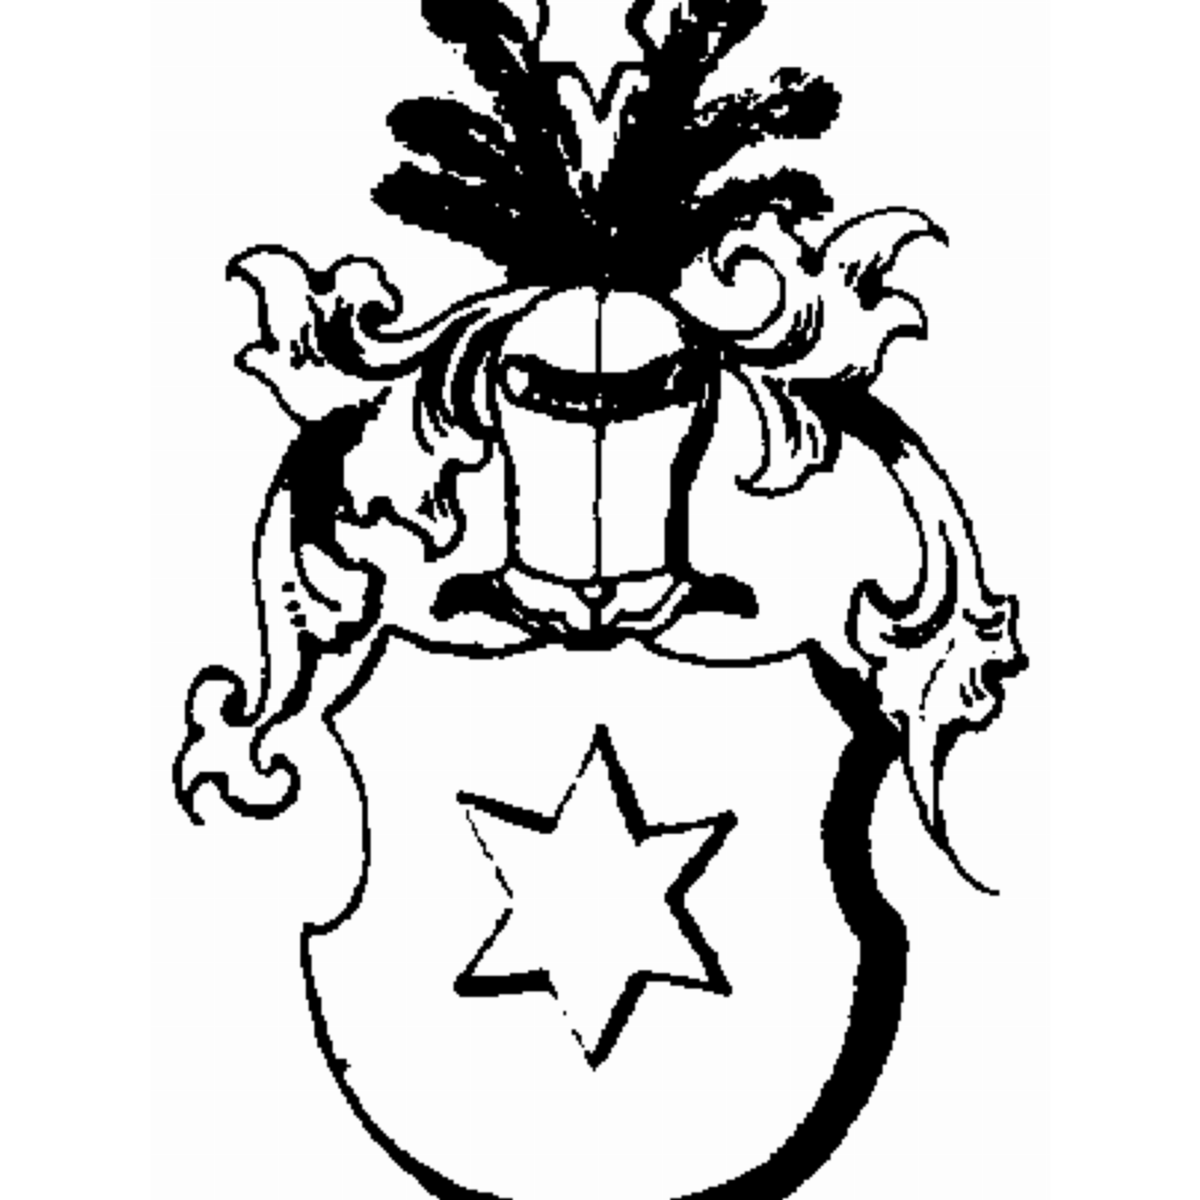 Coat of arms of family Zenetti